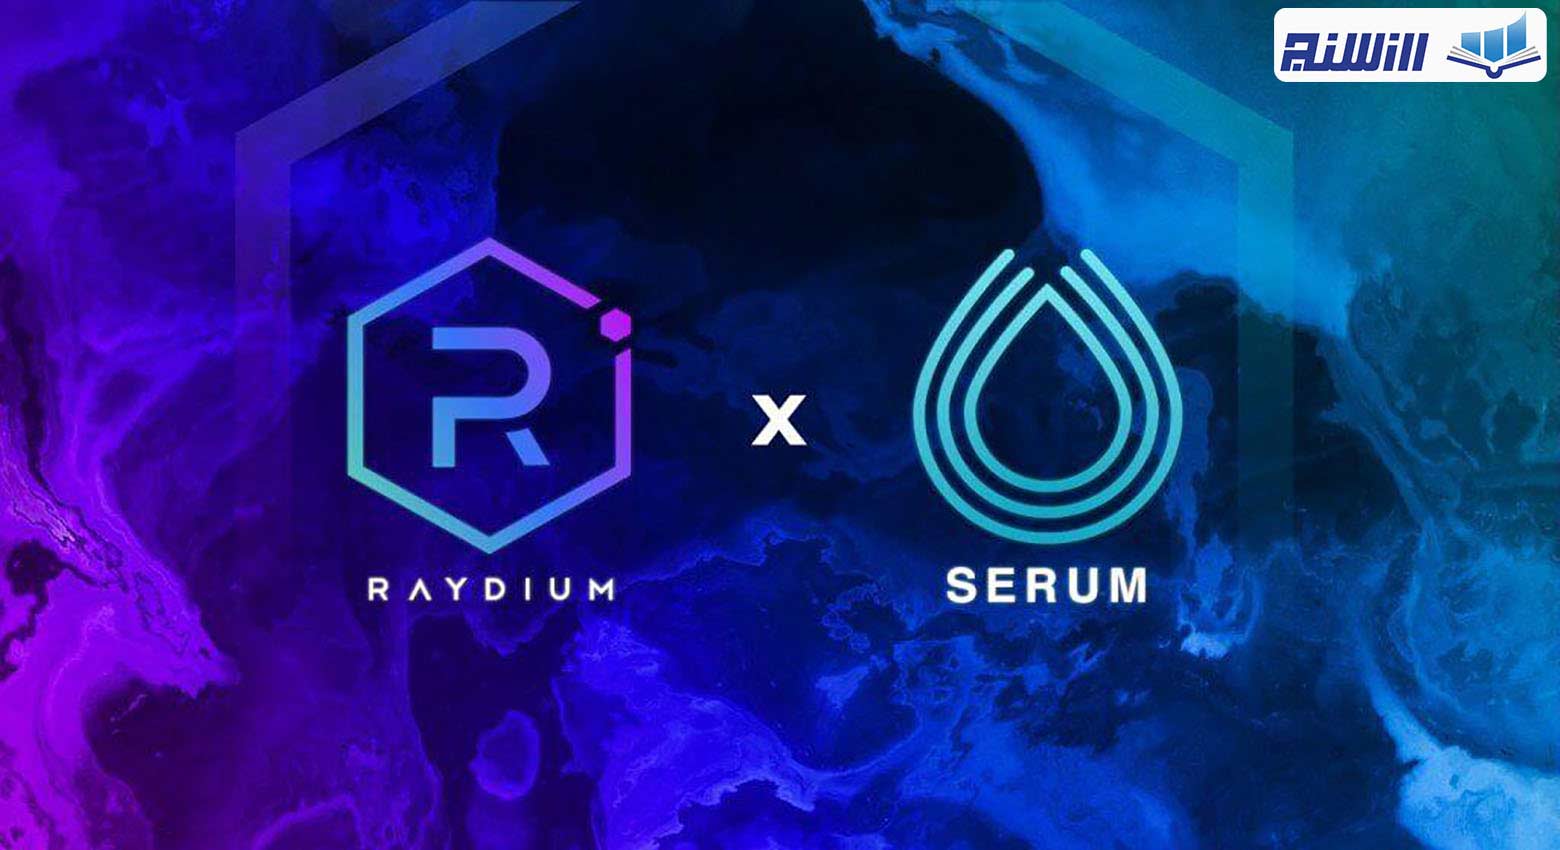 آموزش پلتفرم سروم  Serum و ریدیوم Raydium ( پلتفرم های شبکه سولانا)